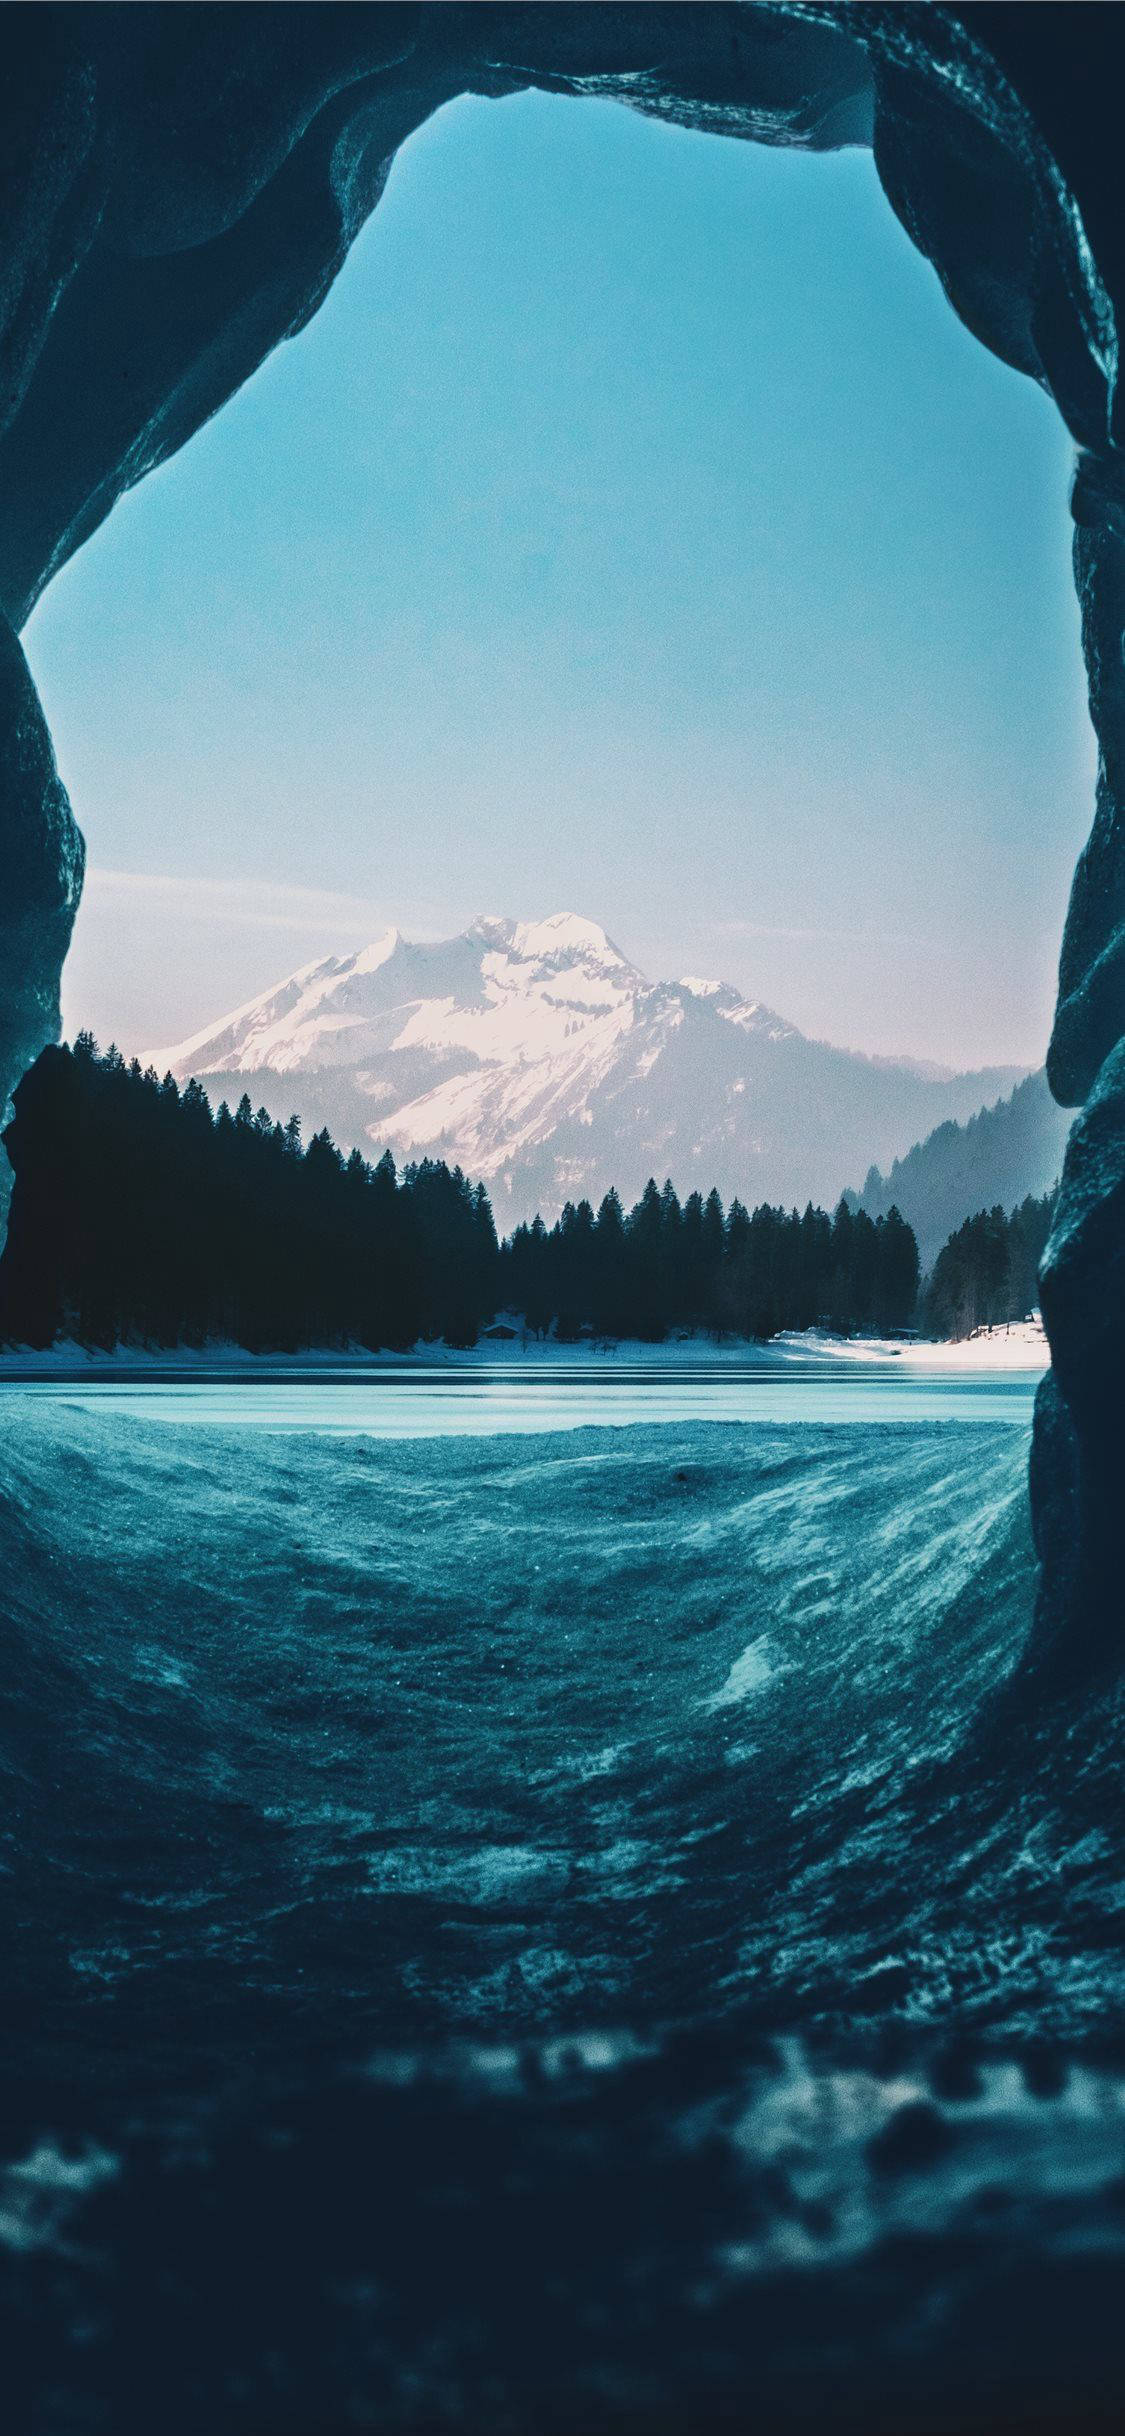 IPhone wallpaper of a snowy mountain landscape seen through a cave. - Ocean